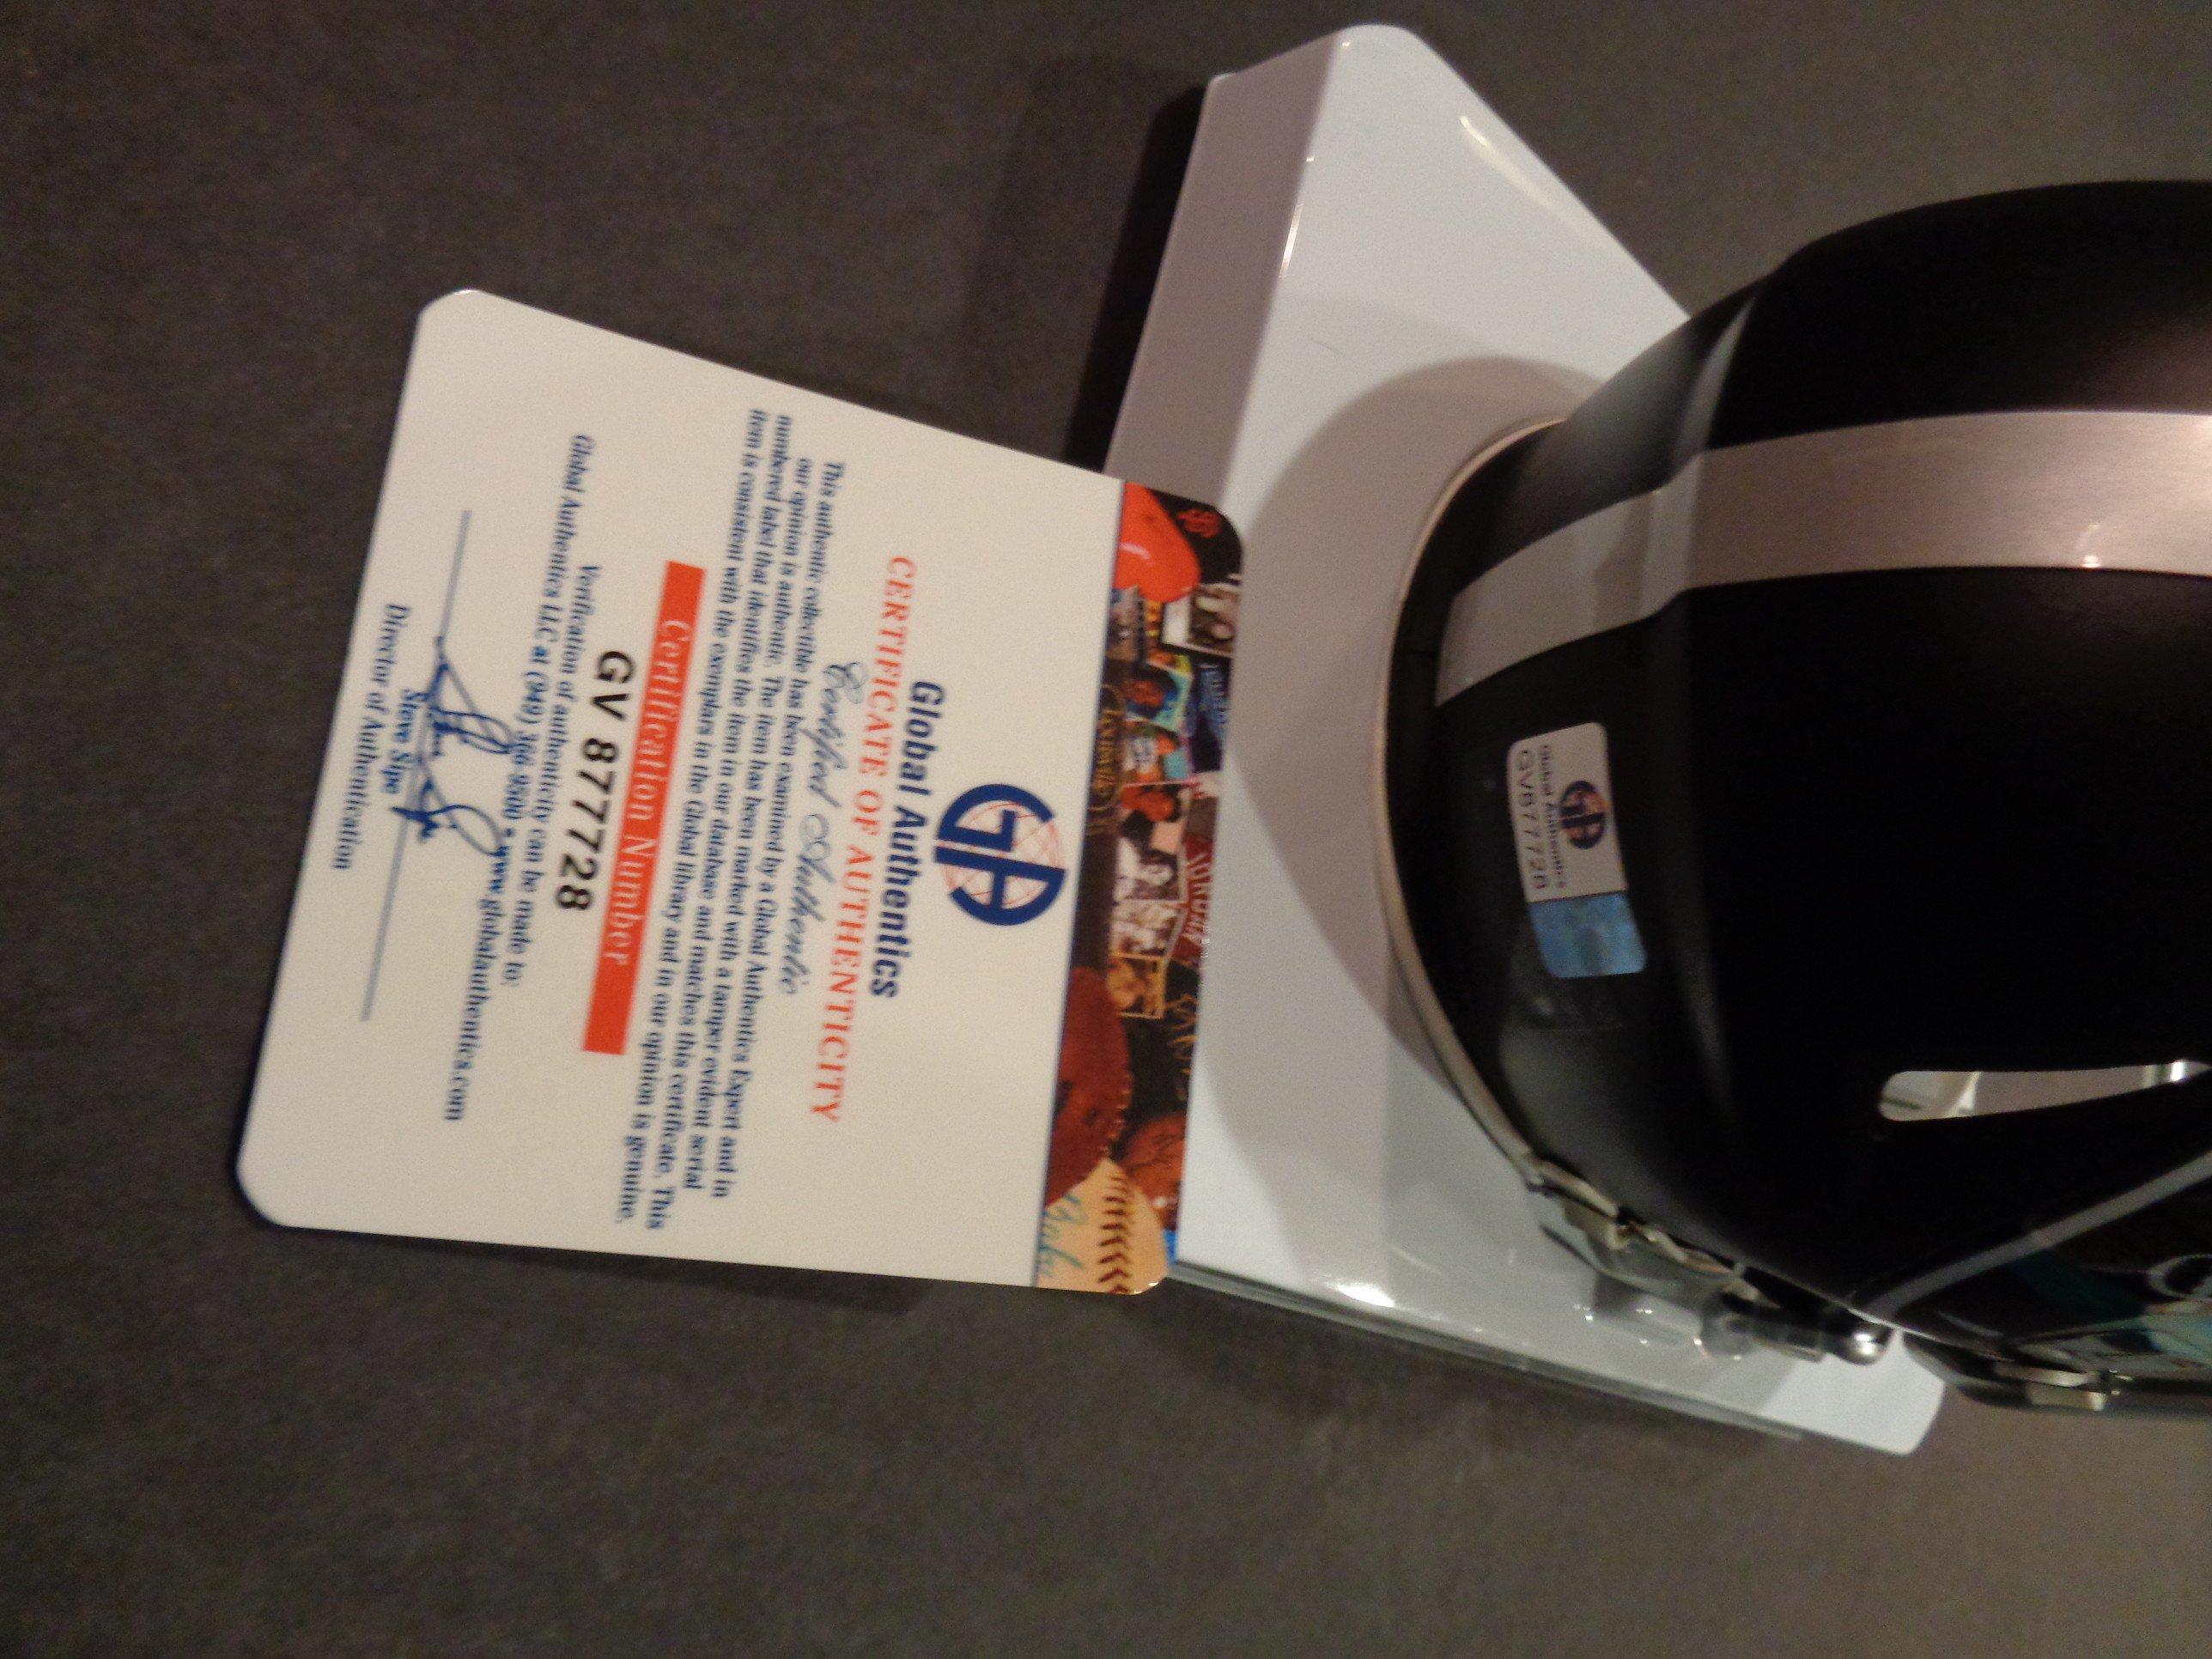 Derek Carr Oakland Raiders Autographed Blaze Mini Helmet w/GA coa